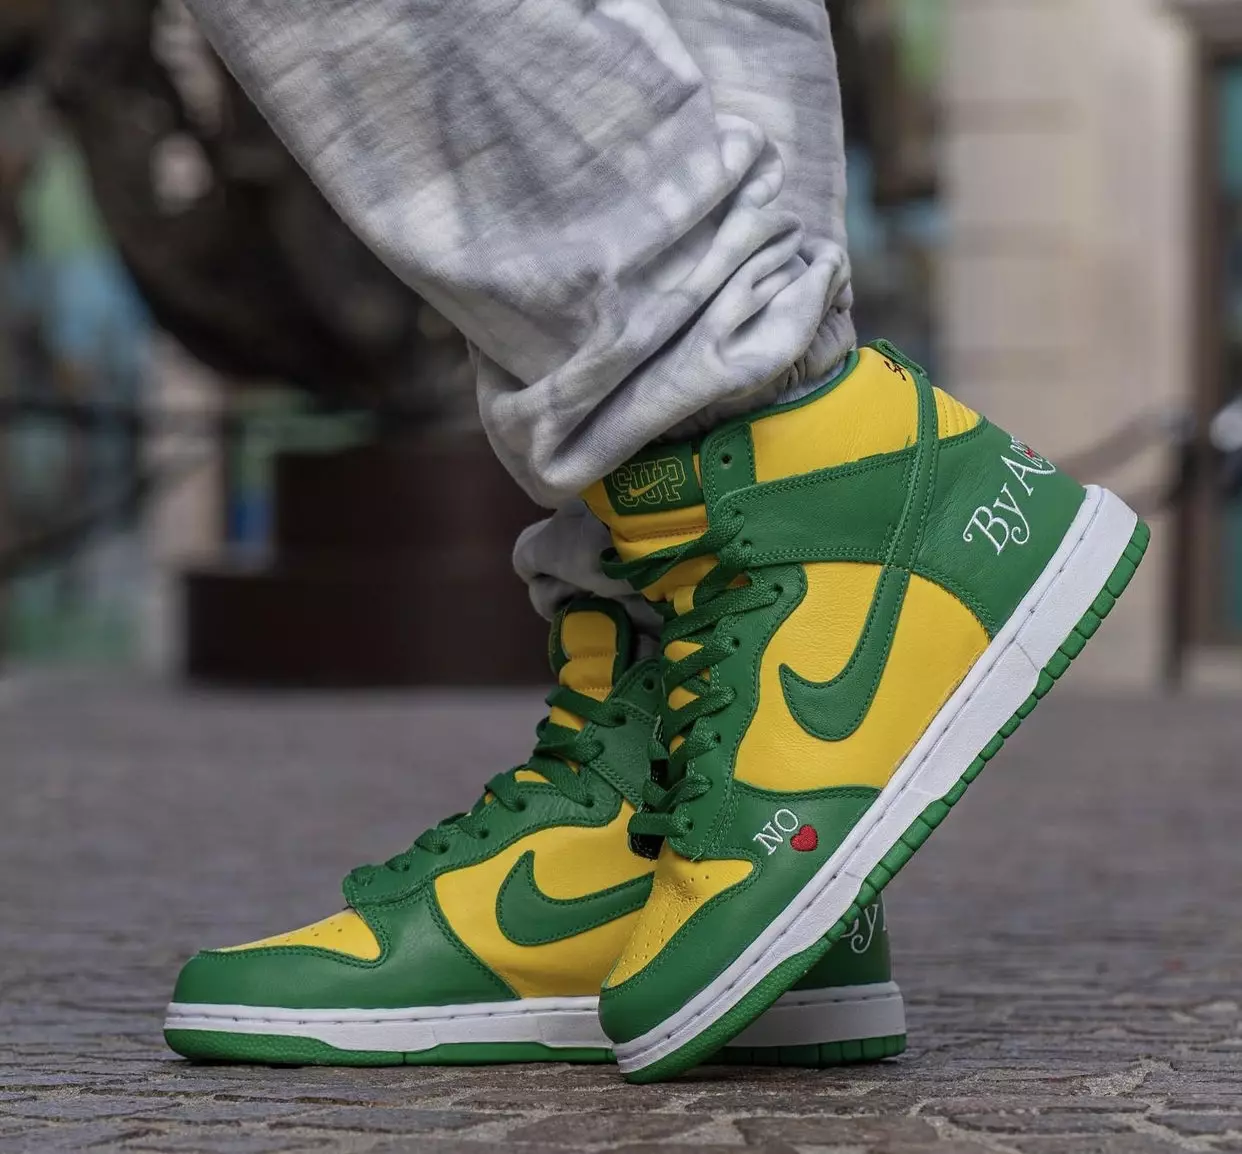 Supreme Nike SB Dunk High Brazil בכל אופן DN3741-700 תאריך שחרור על הרגליים